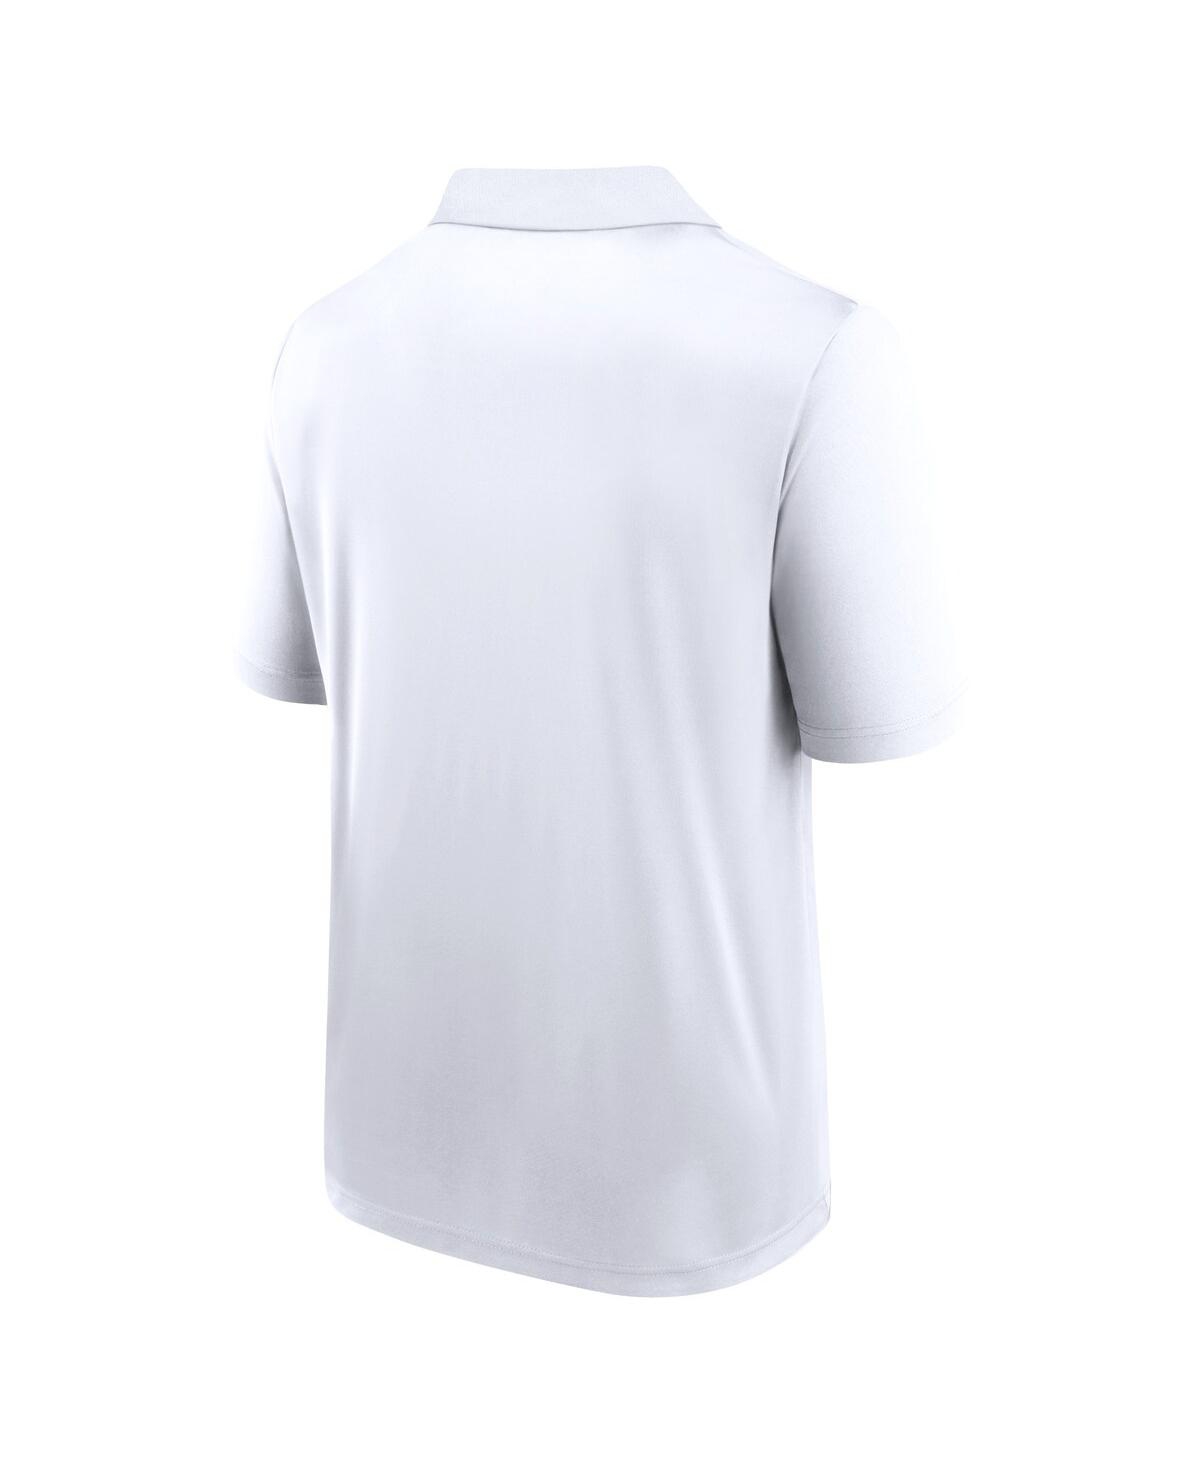 Shop Fanatics Men's  White Denver Broncos Victory For Us Interlock Polo Shirt